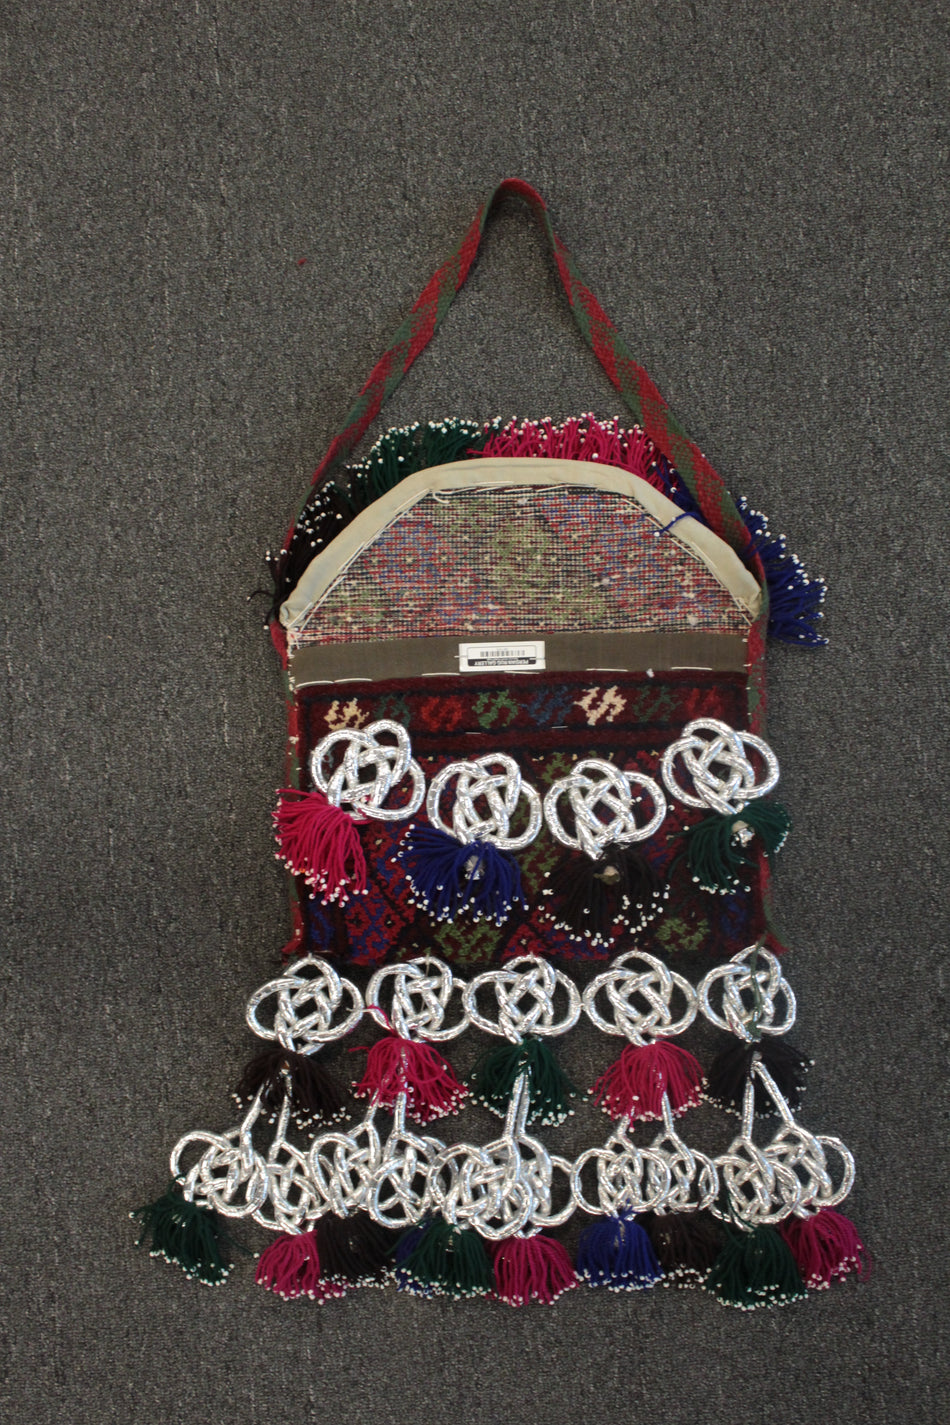 Decorative Handbag